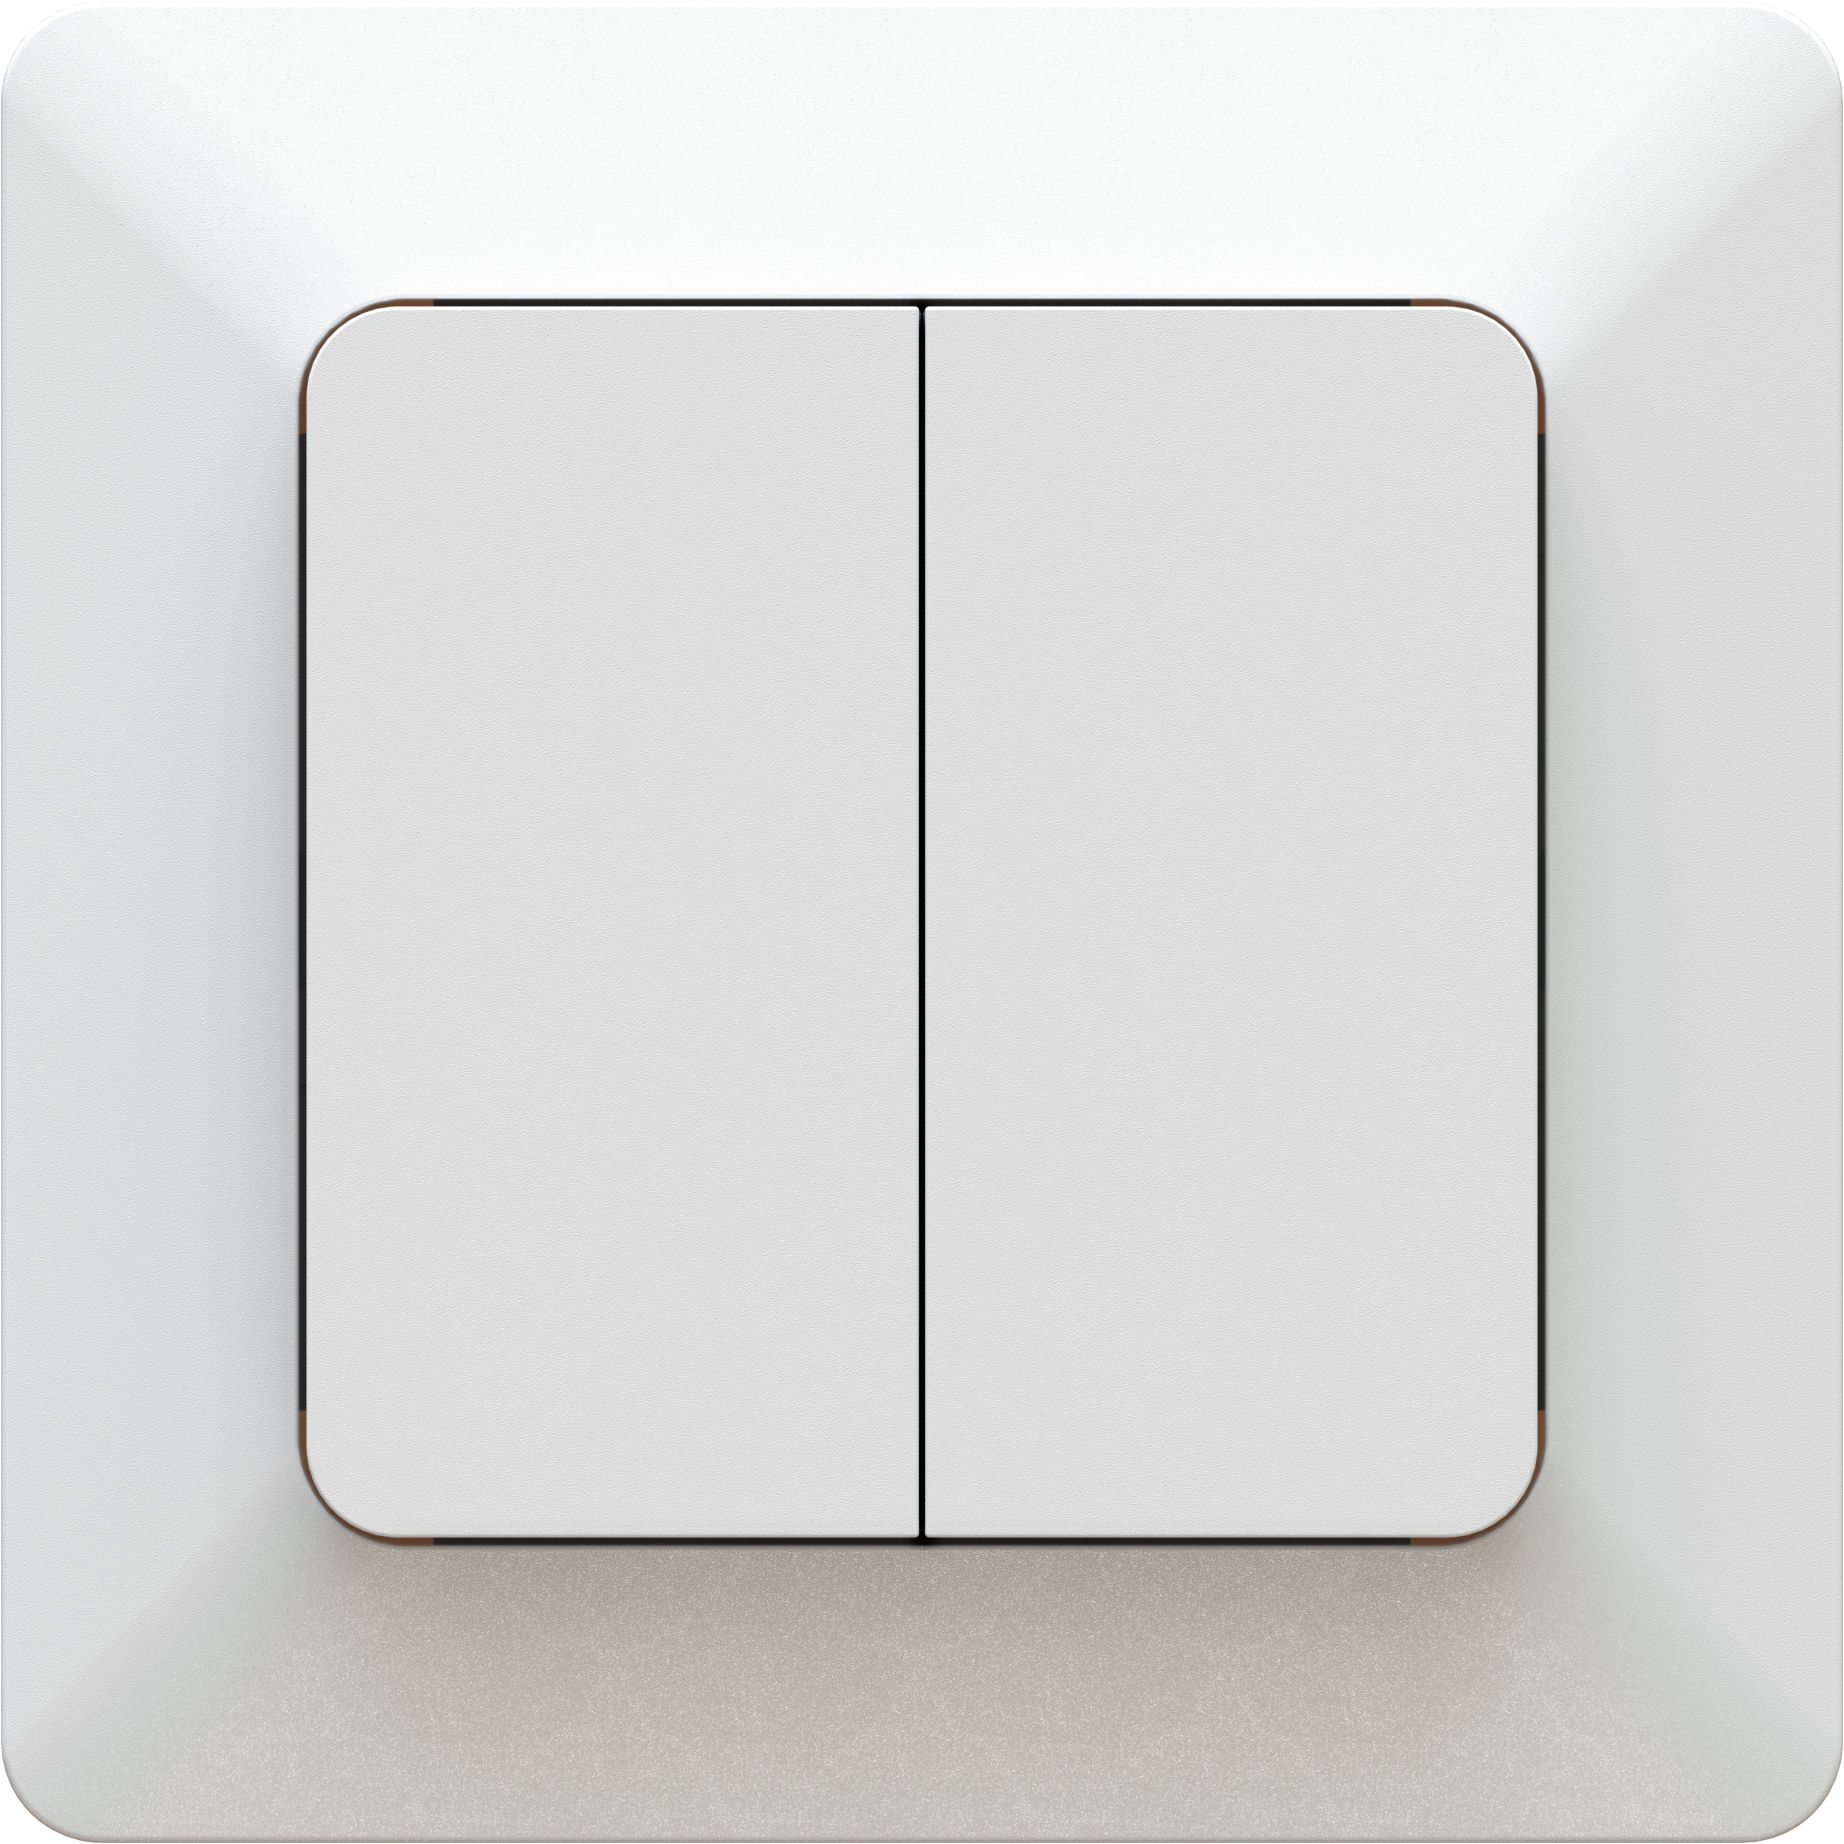 Flush-type wall switch schema 1 white